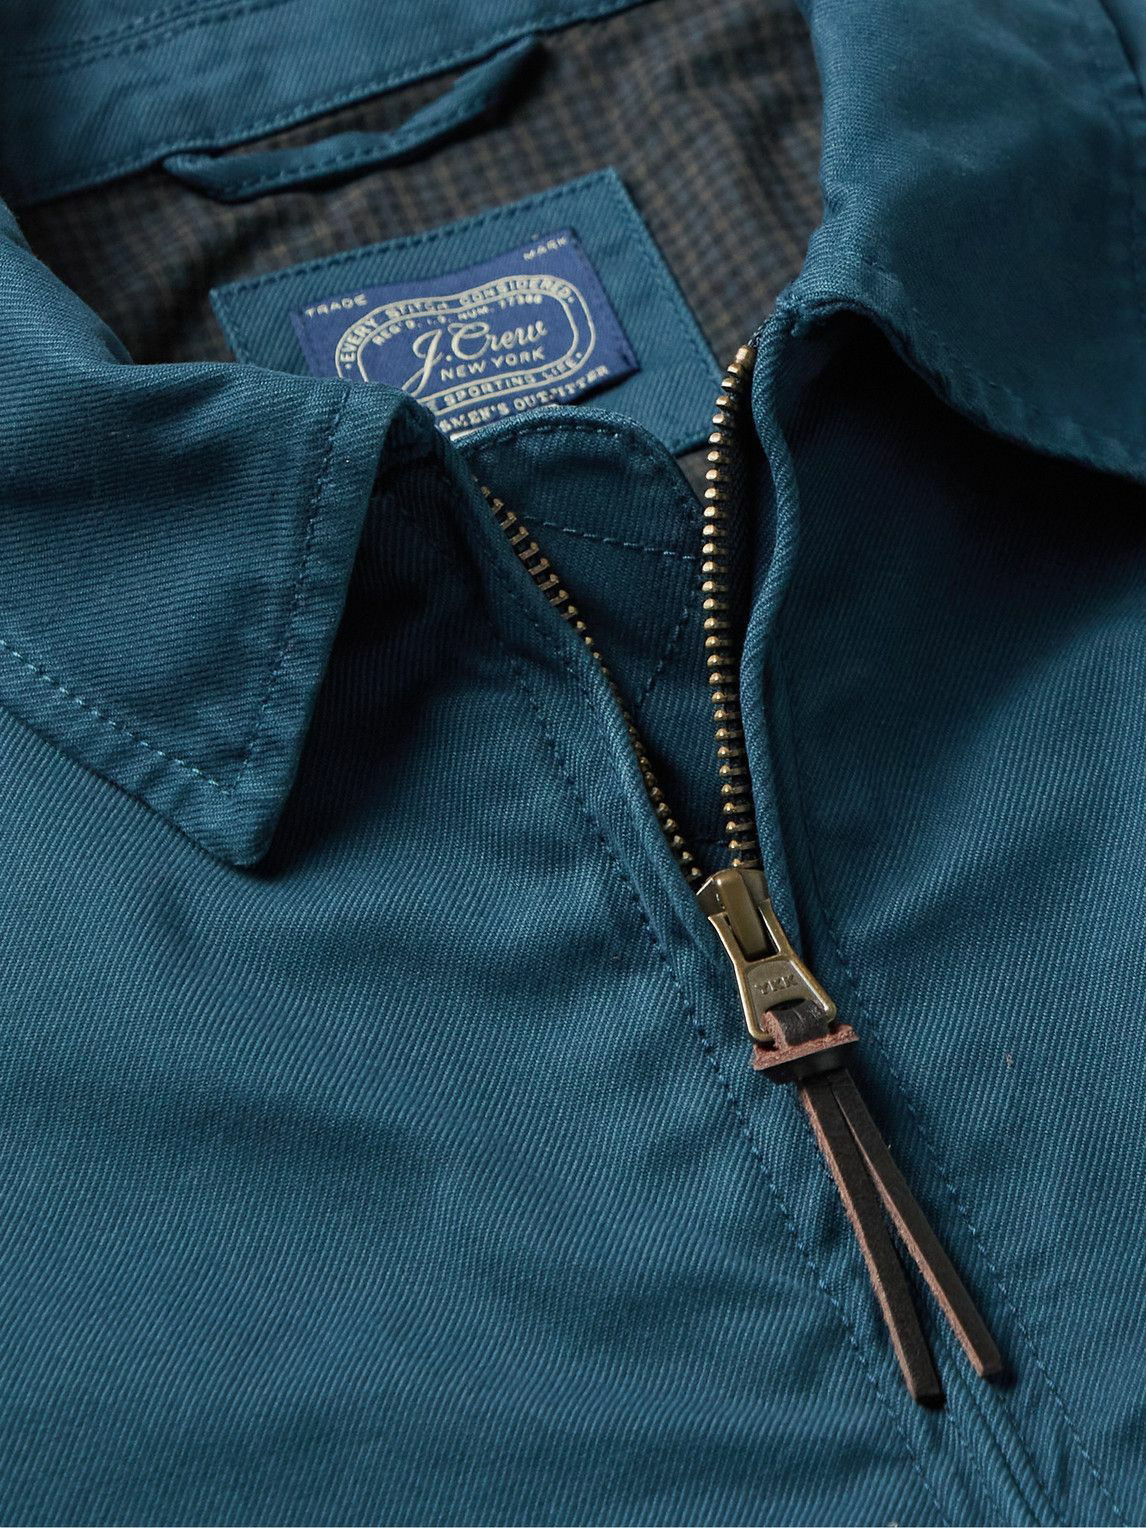 J.Crew: Harrington Jacket In Cotton Twill For Men